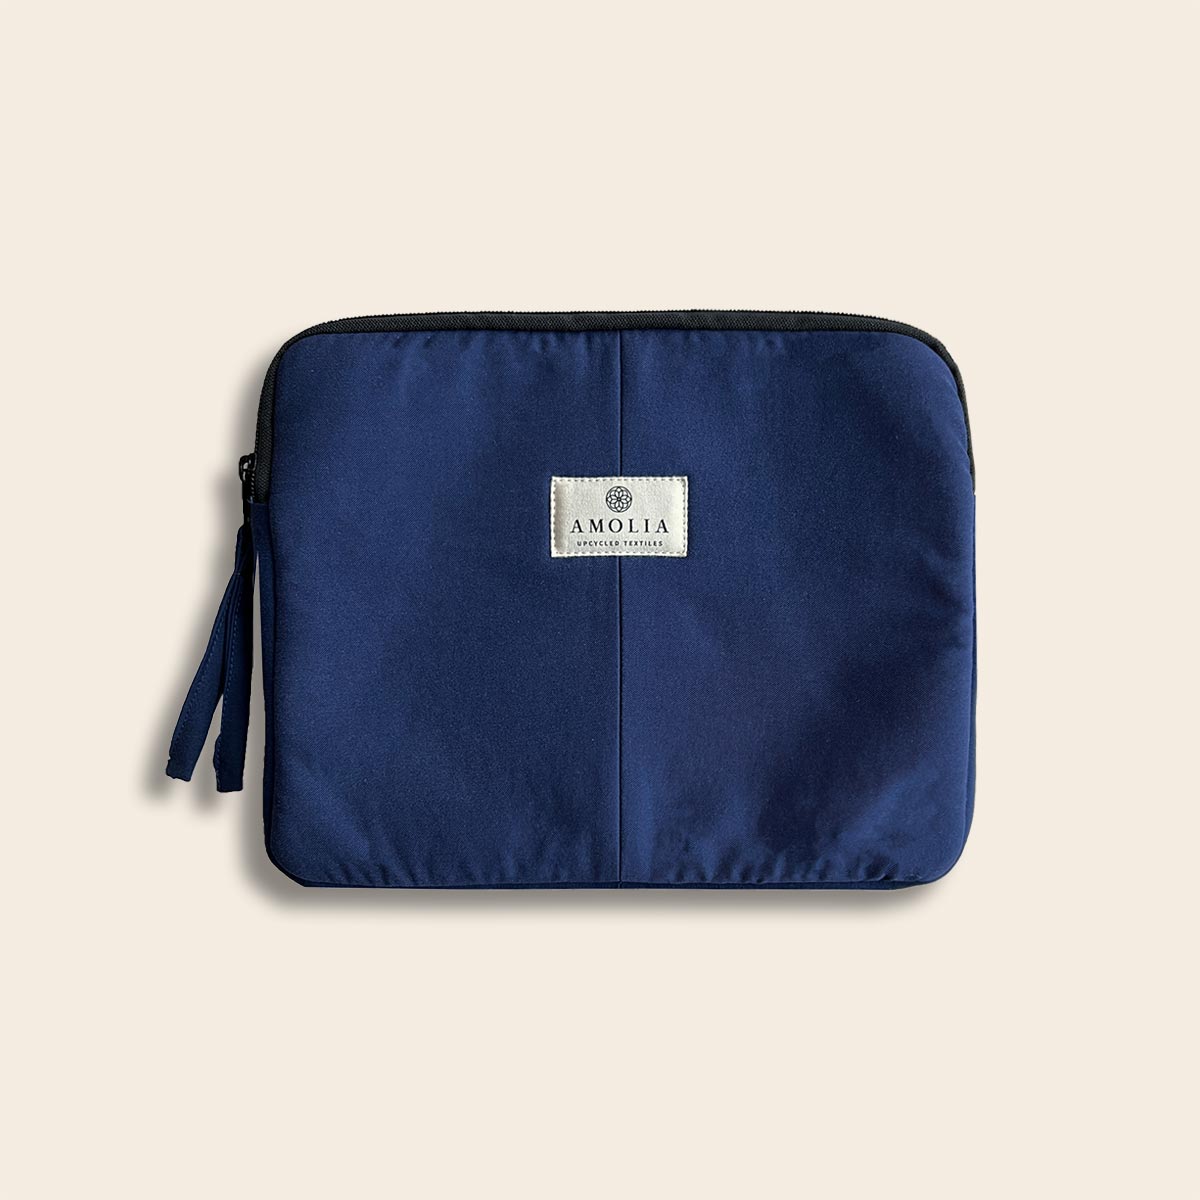 Upcycled iPad bag, navy blue